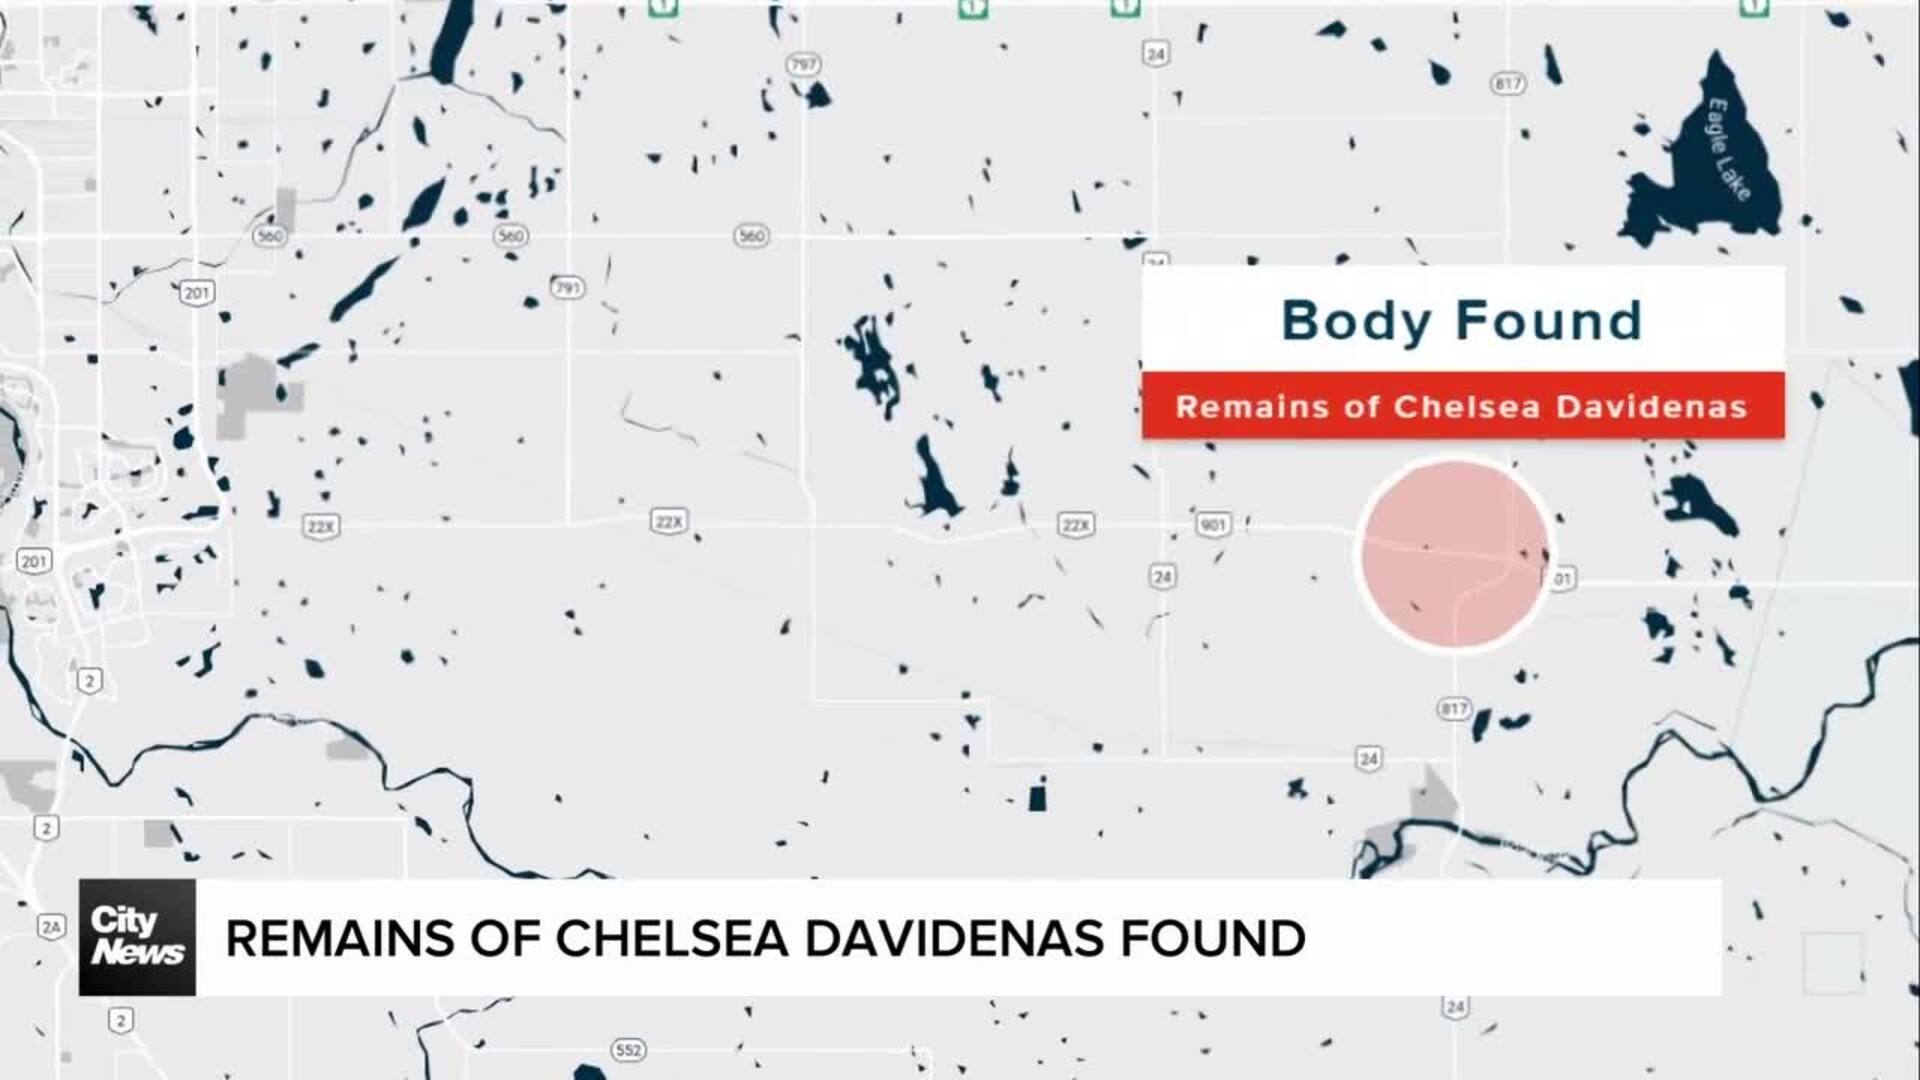 Remains of Chelsea Davidenas found